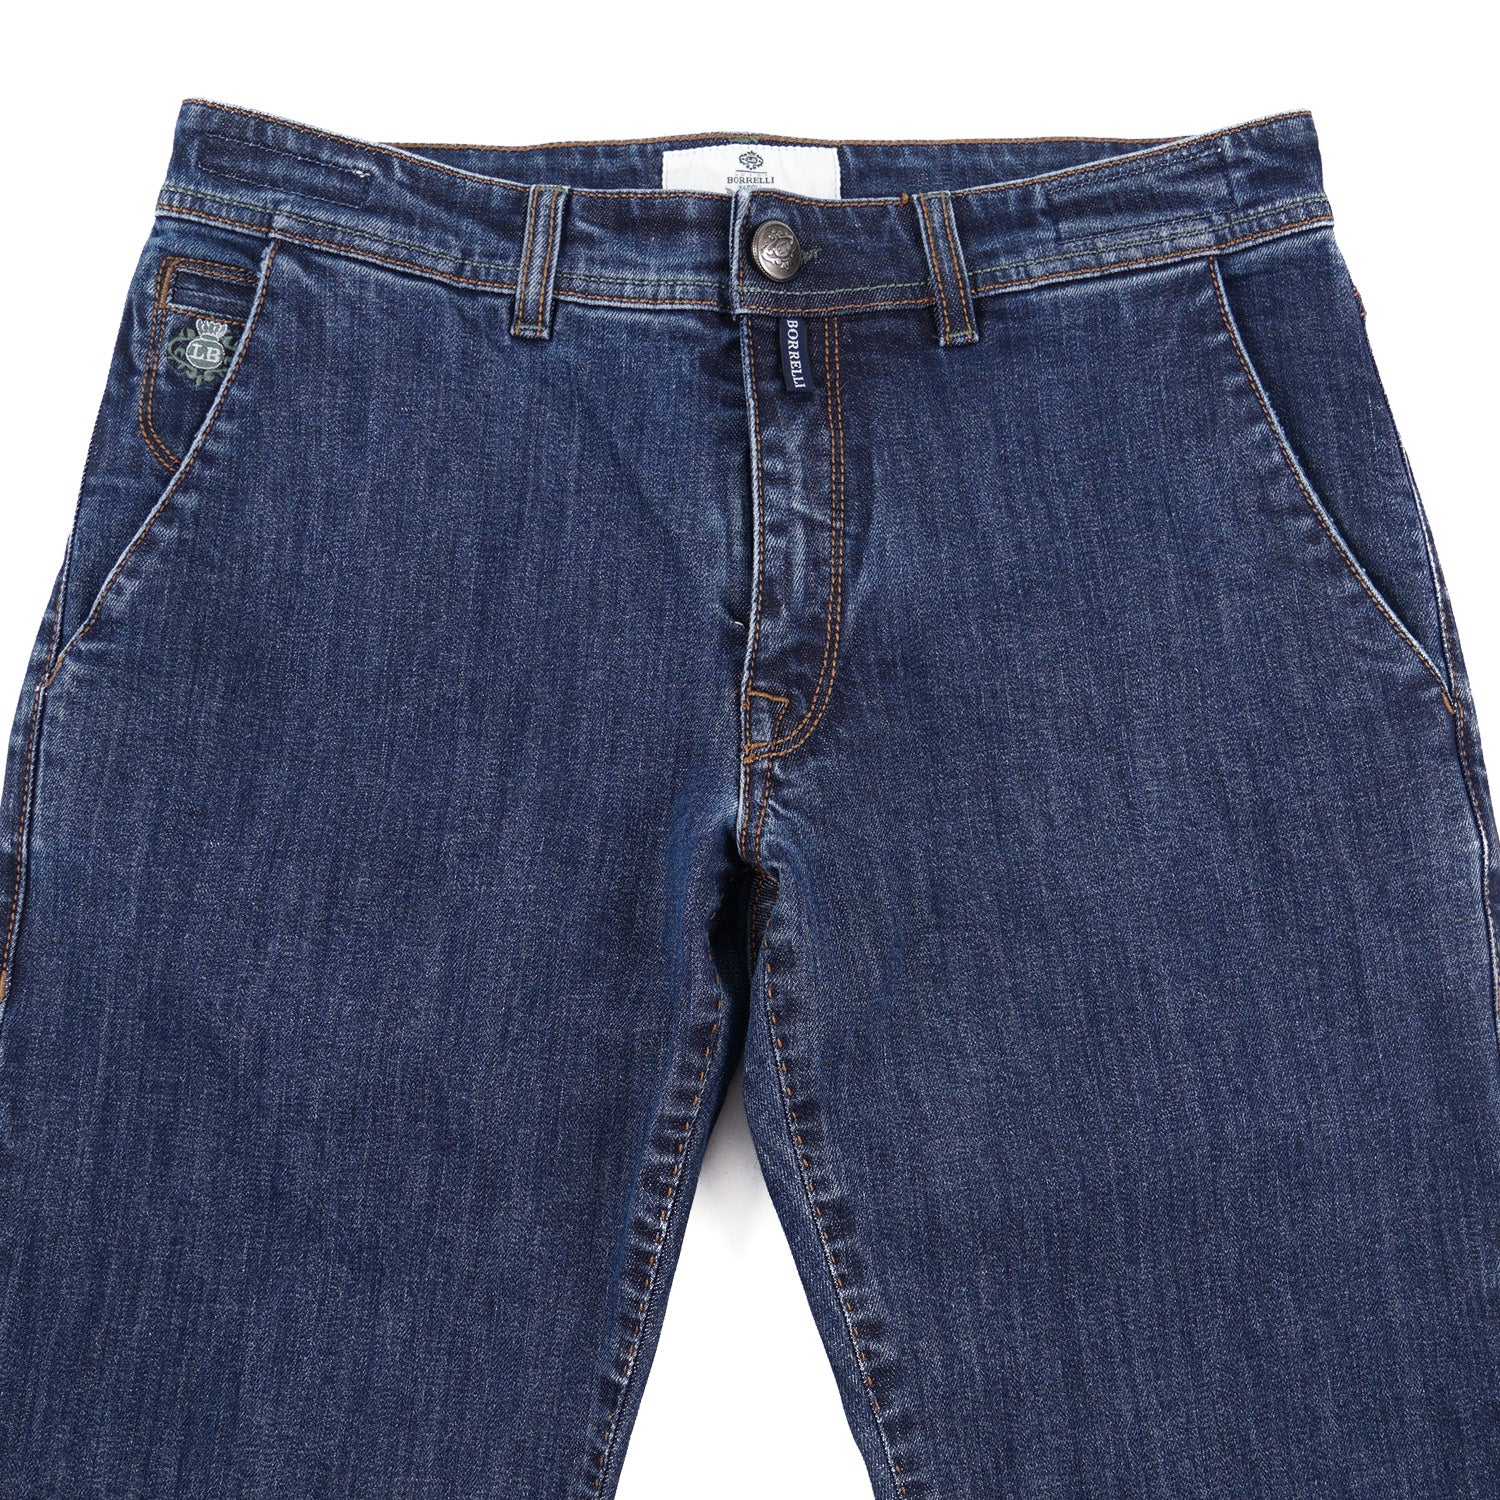 Luigi Borrelli Extra-Slim Denim Jeans - Top Shelf Apparel